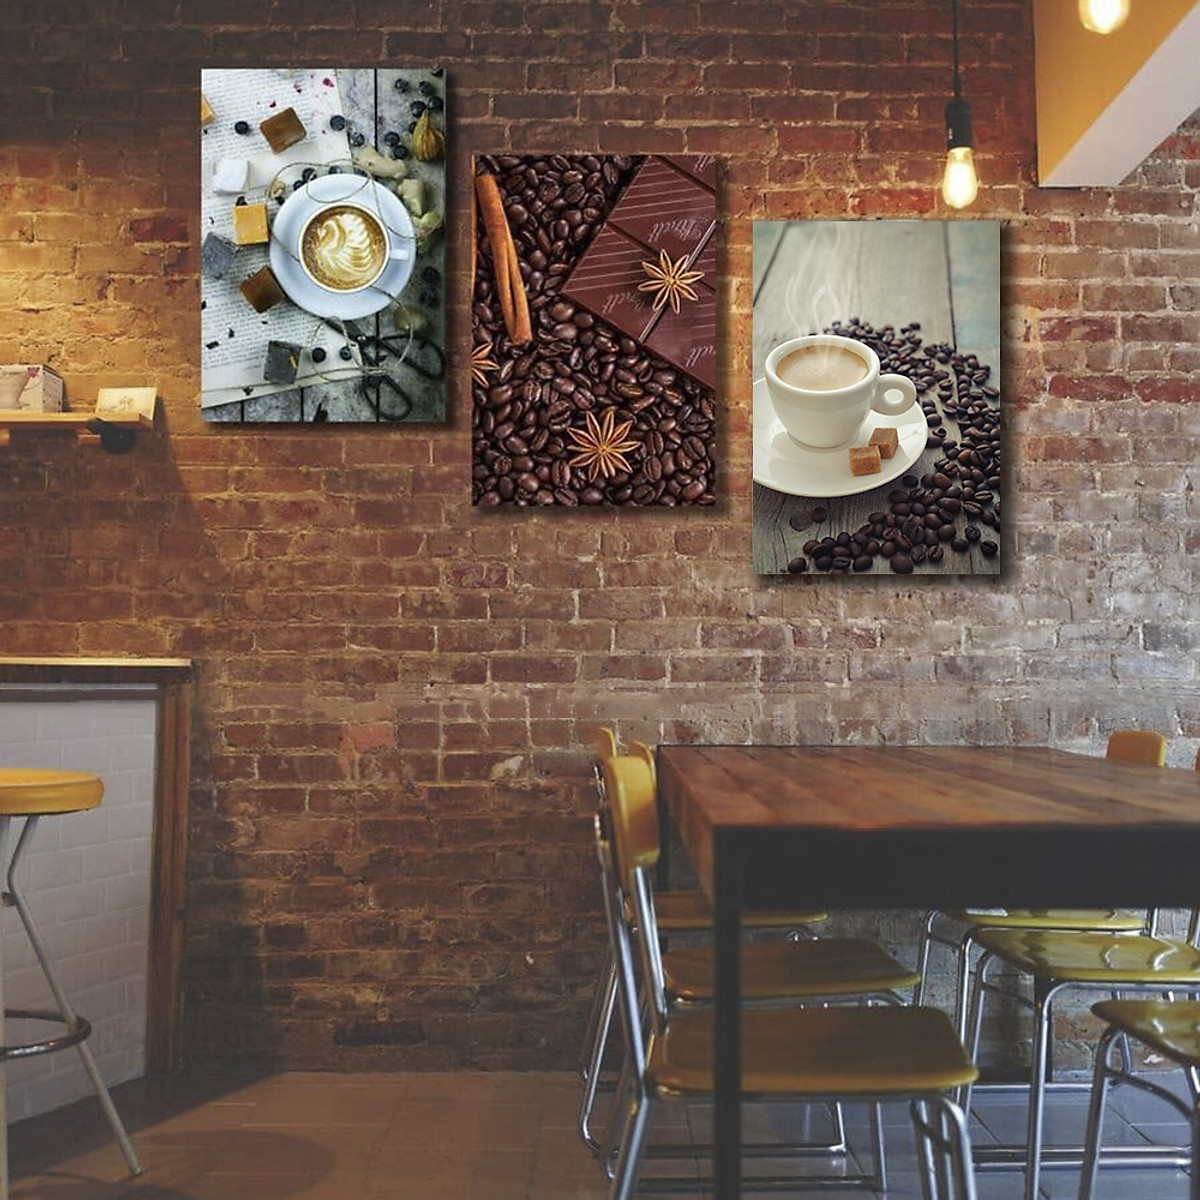 Tranh Treo Tường: Cafe - DC378 - 50x75cm